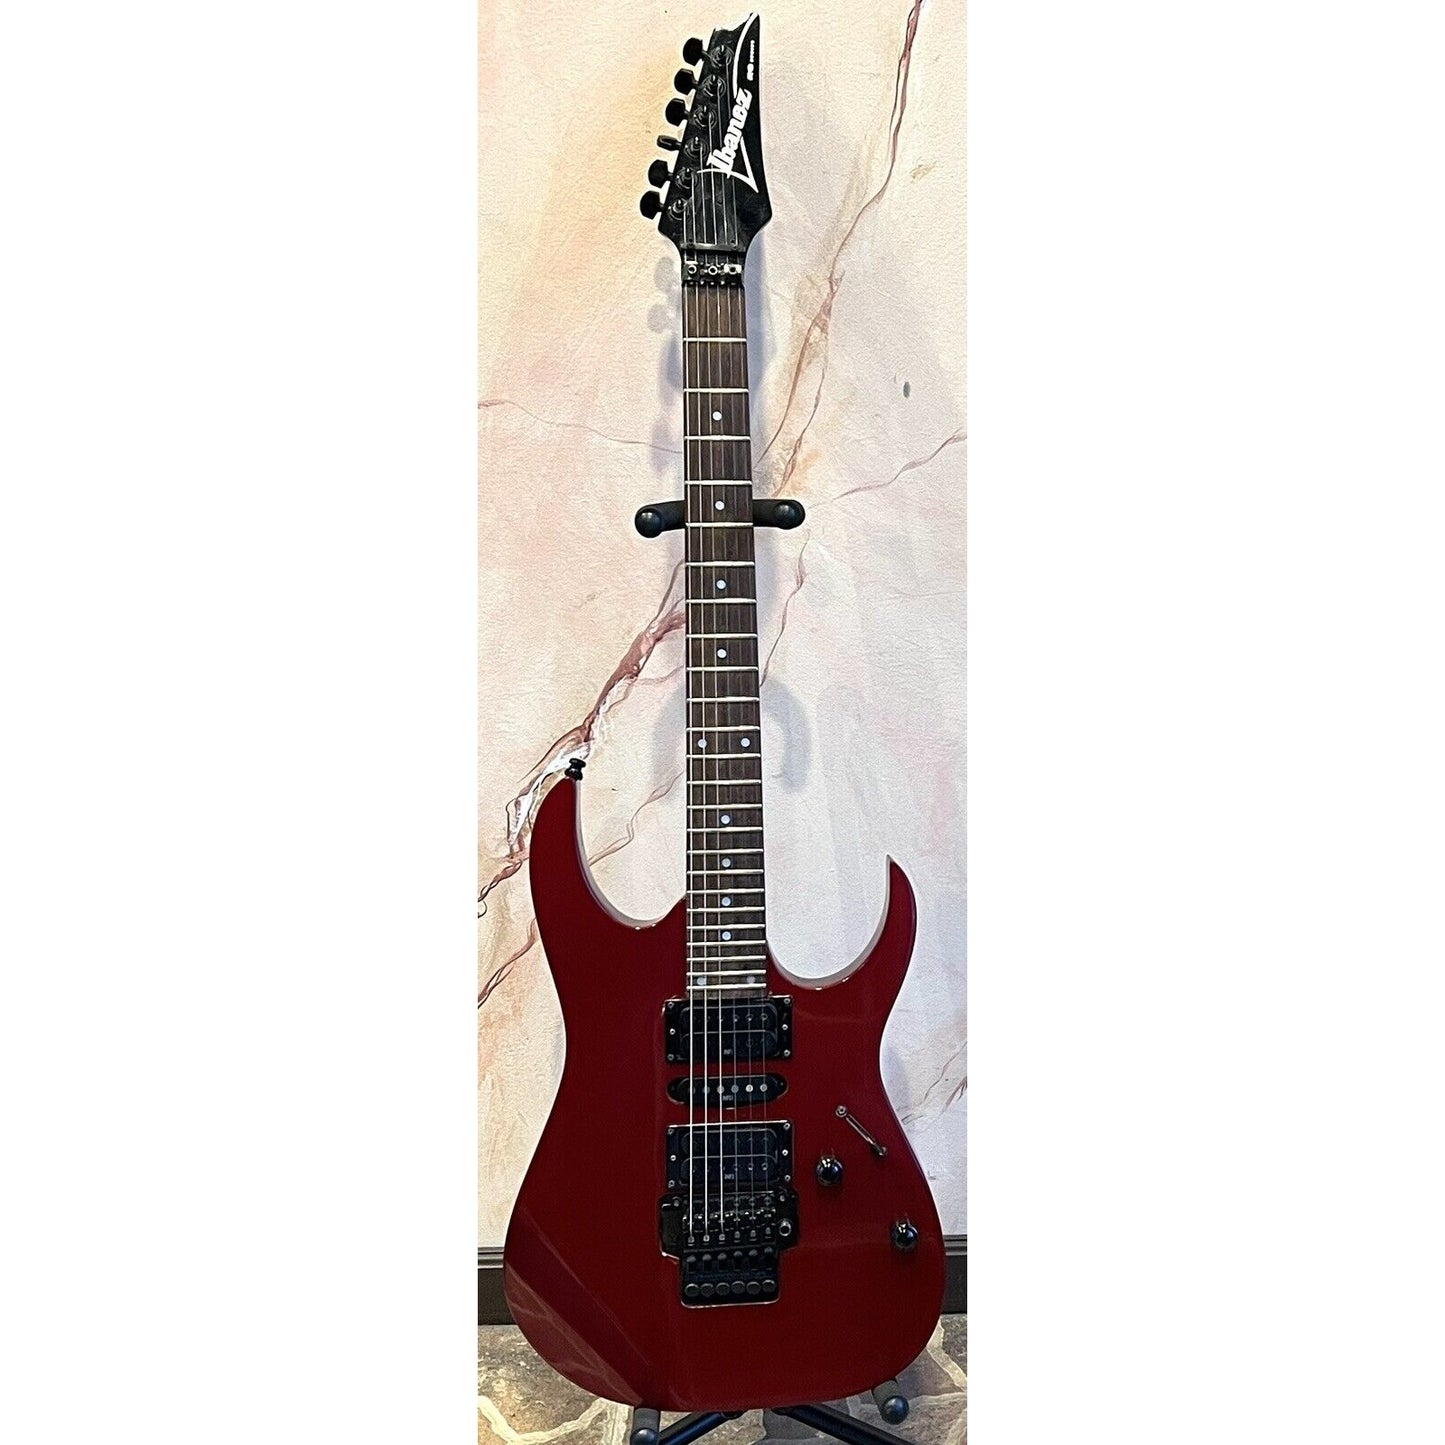 RARE 1994 Ibanez RG470 Crimson Metallic Red Electric Guitar - Made in Korea